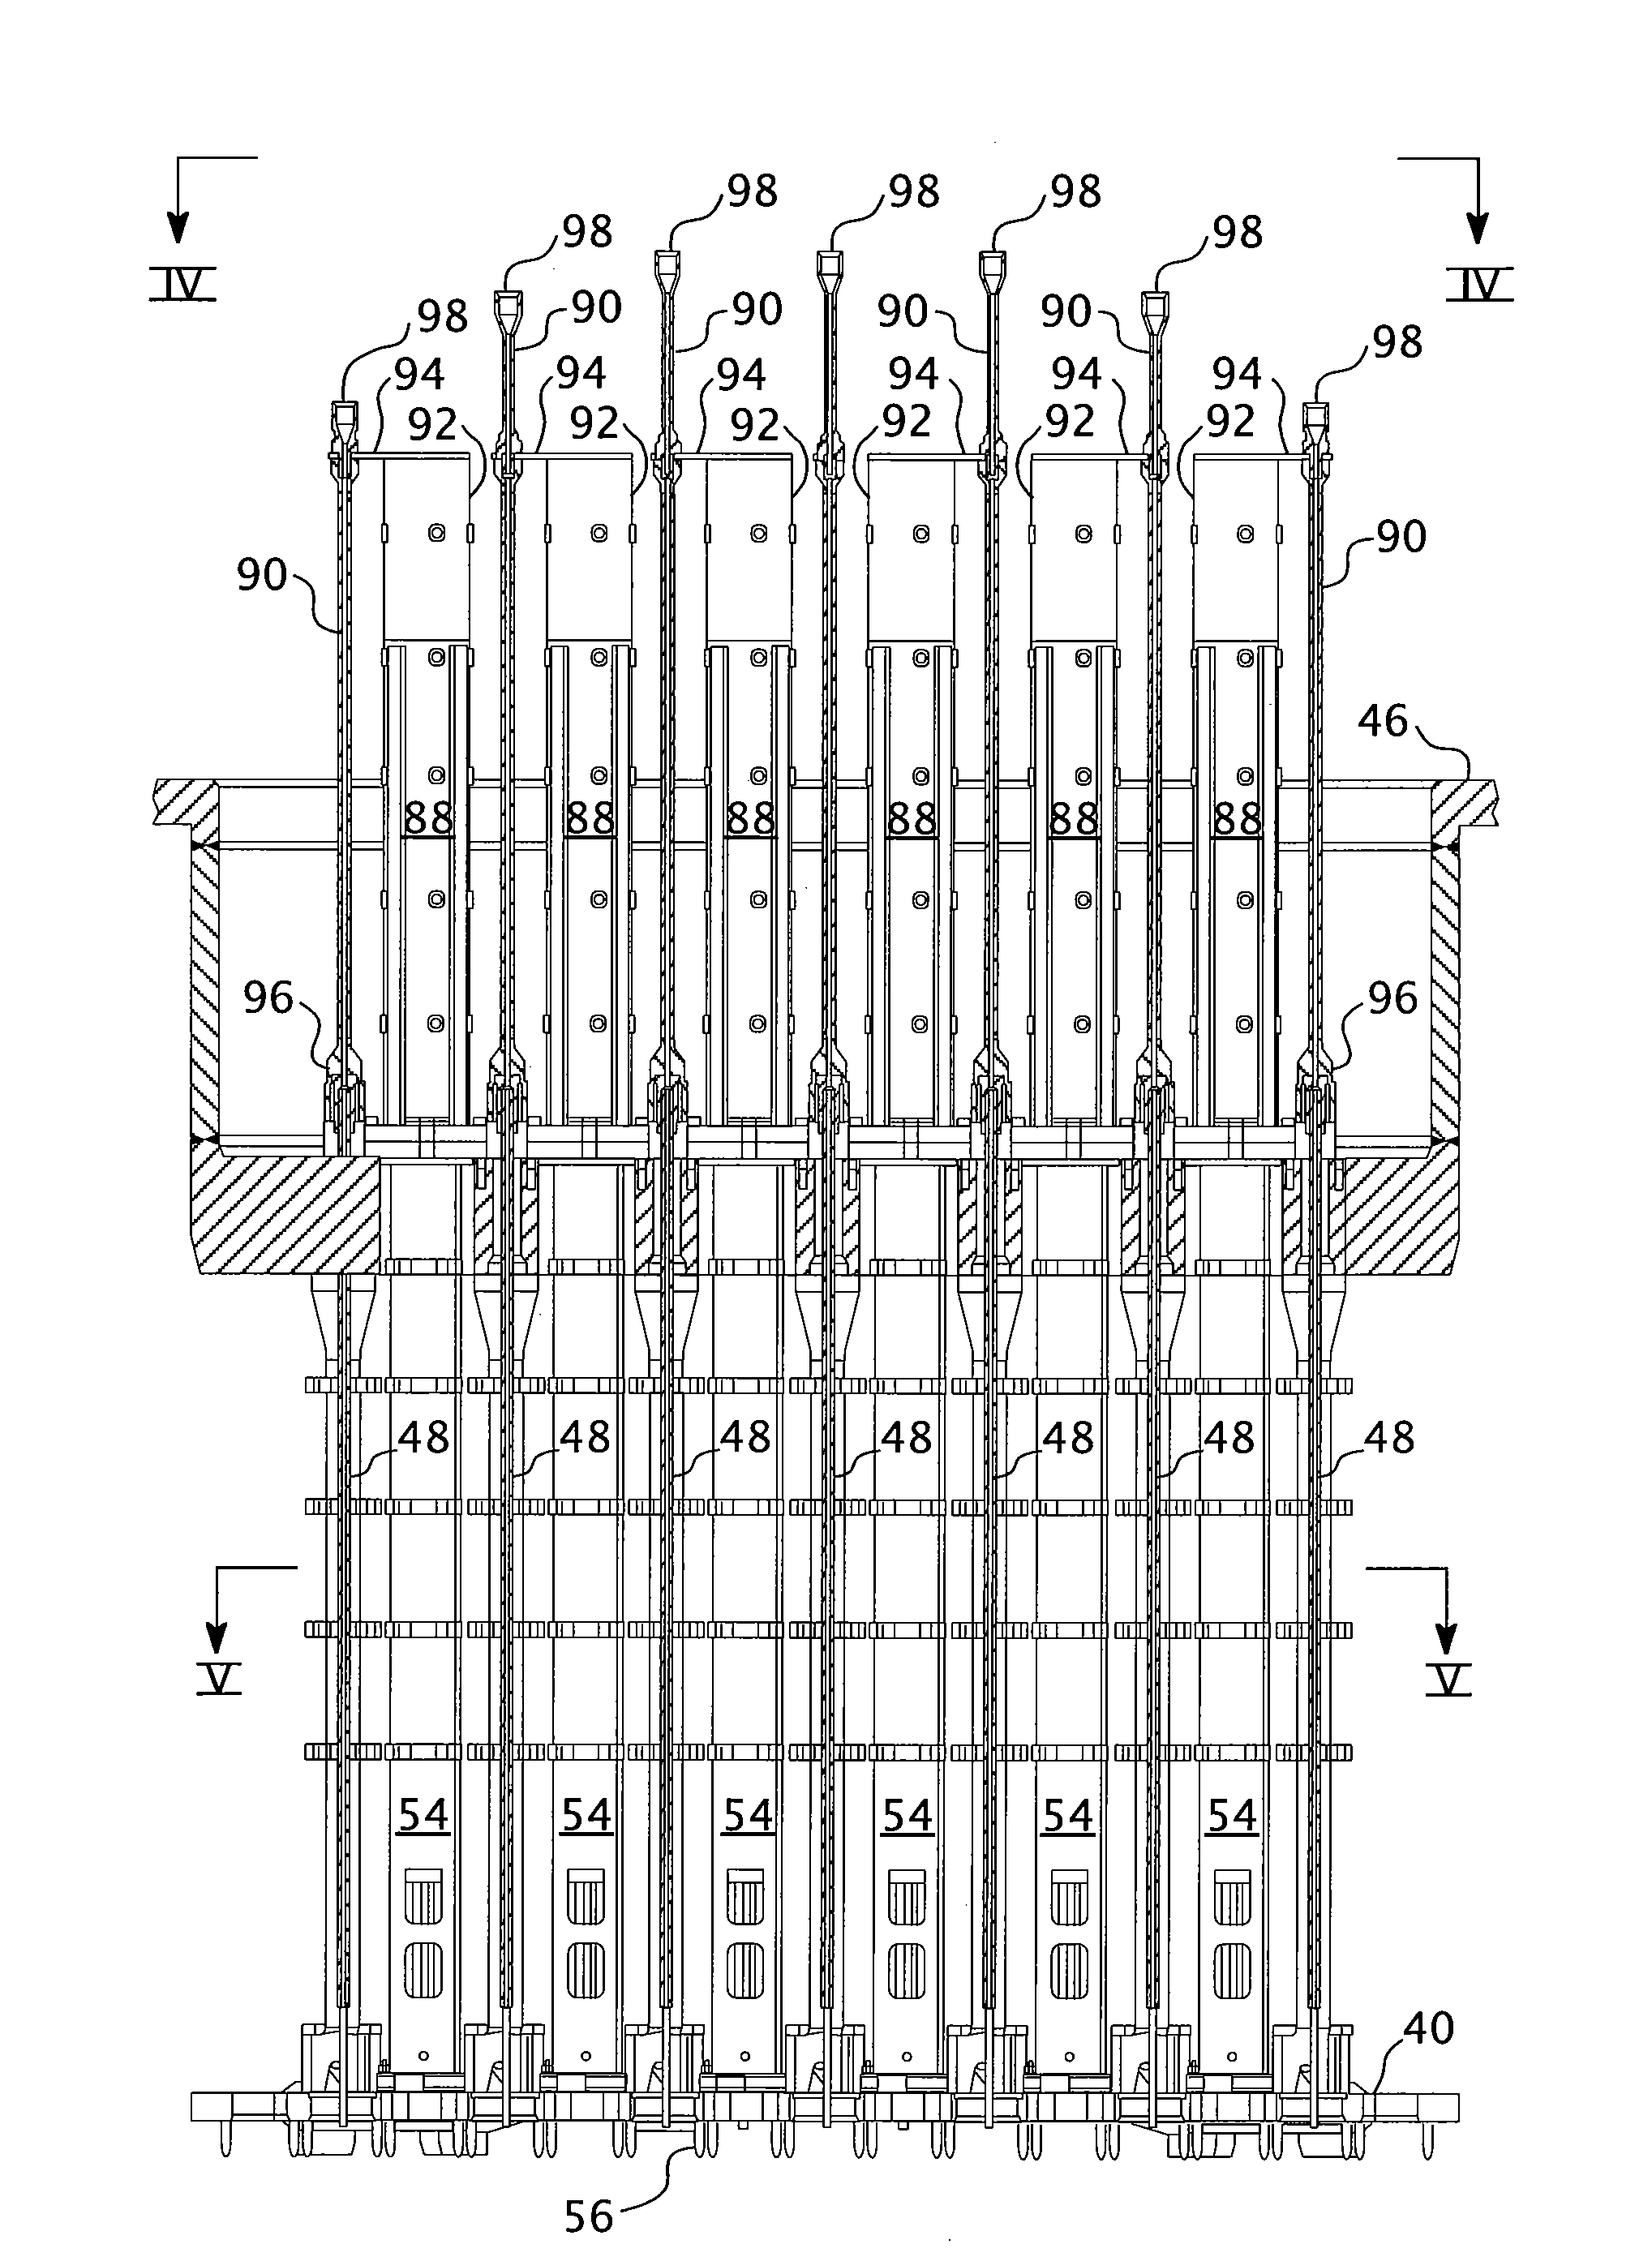 Upper internals arrangement for a pressurized water reactor